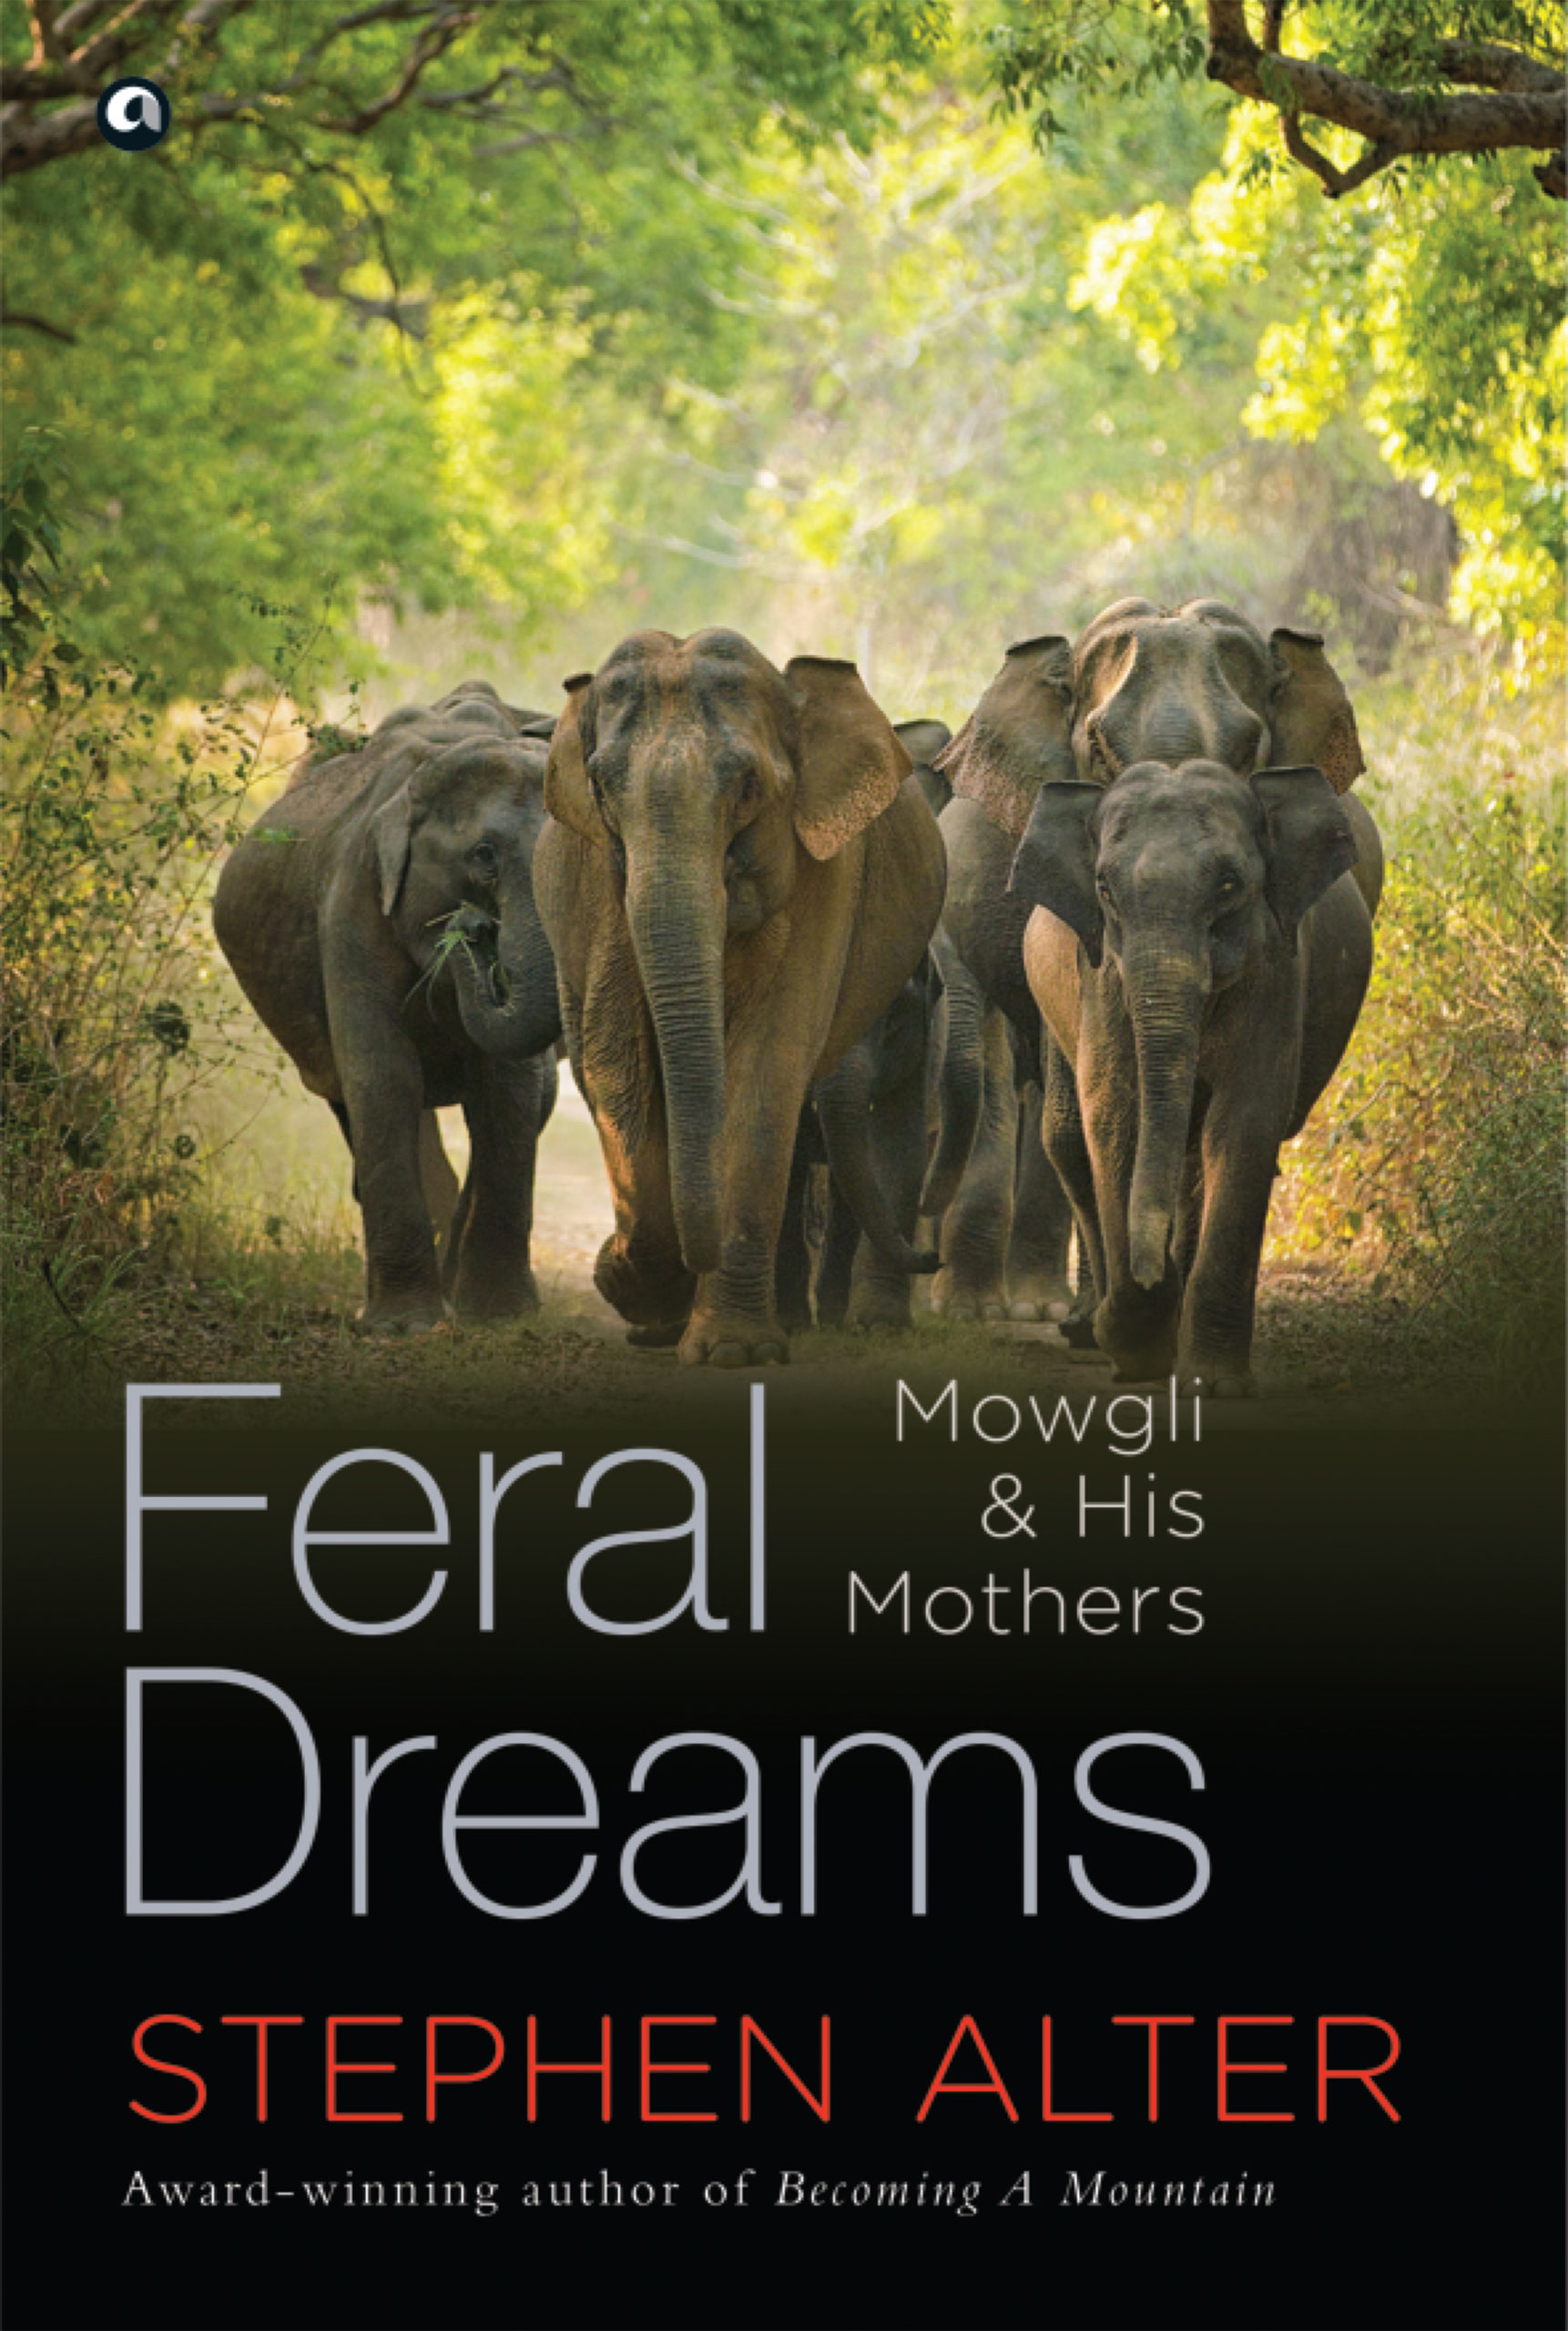 FERAL DREAMS: Mowgli & His Mothers